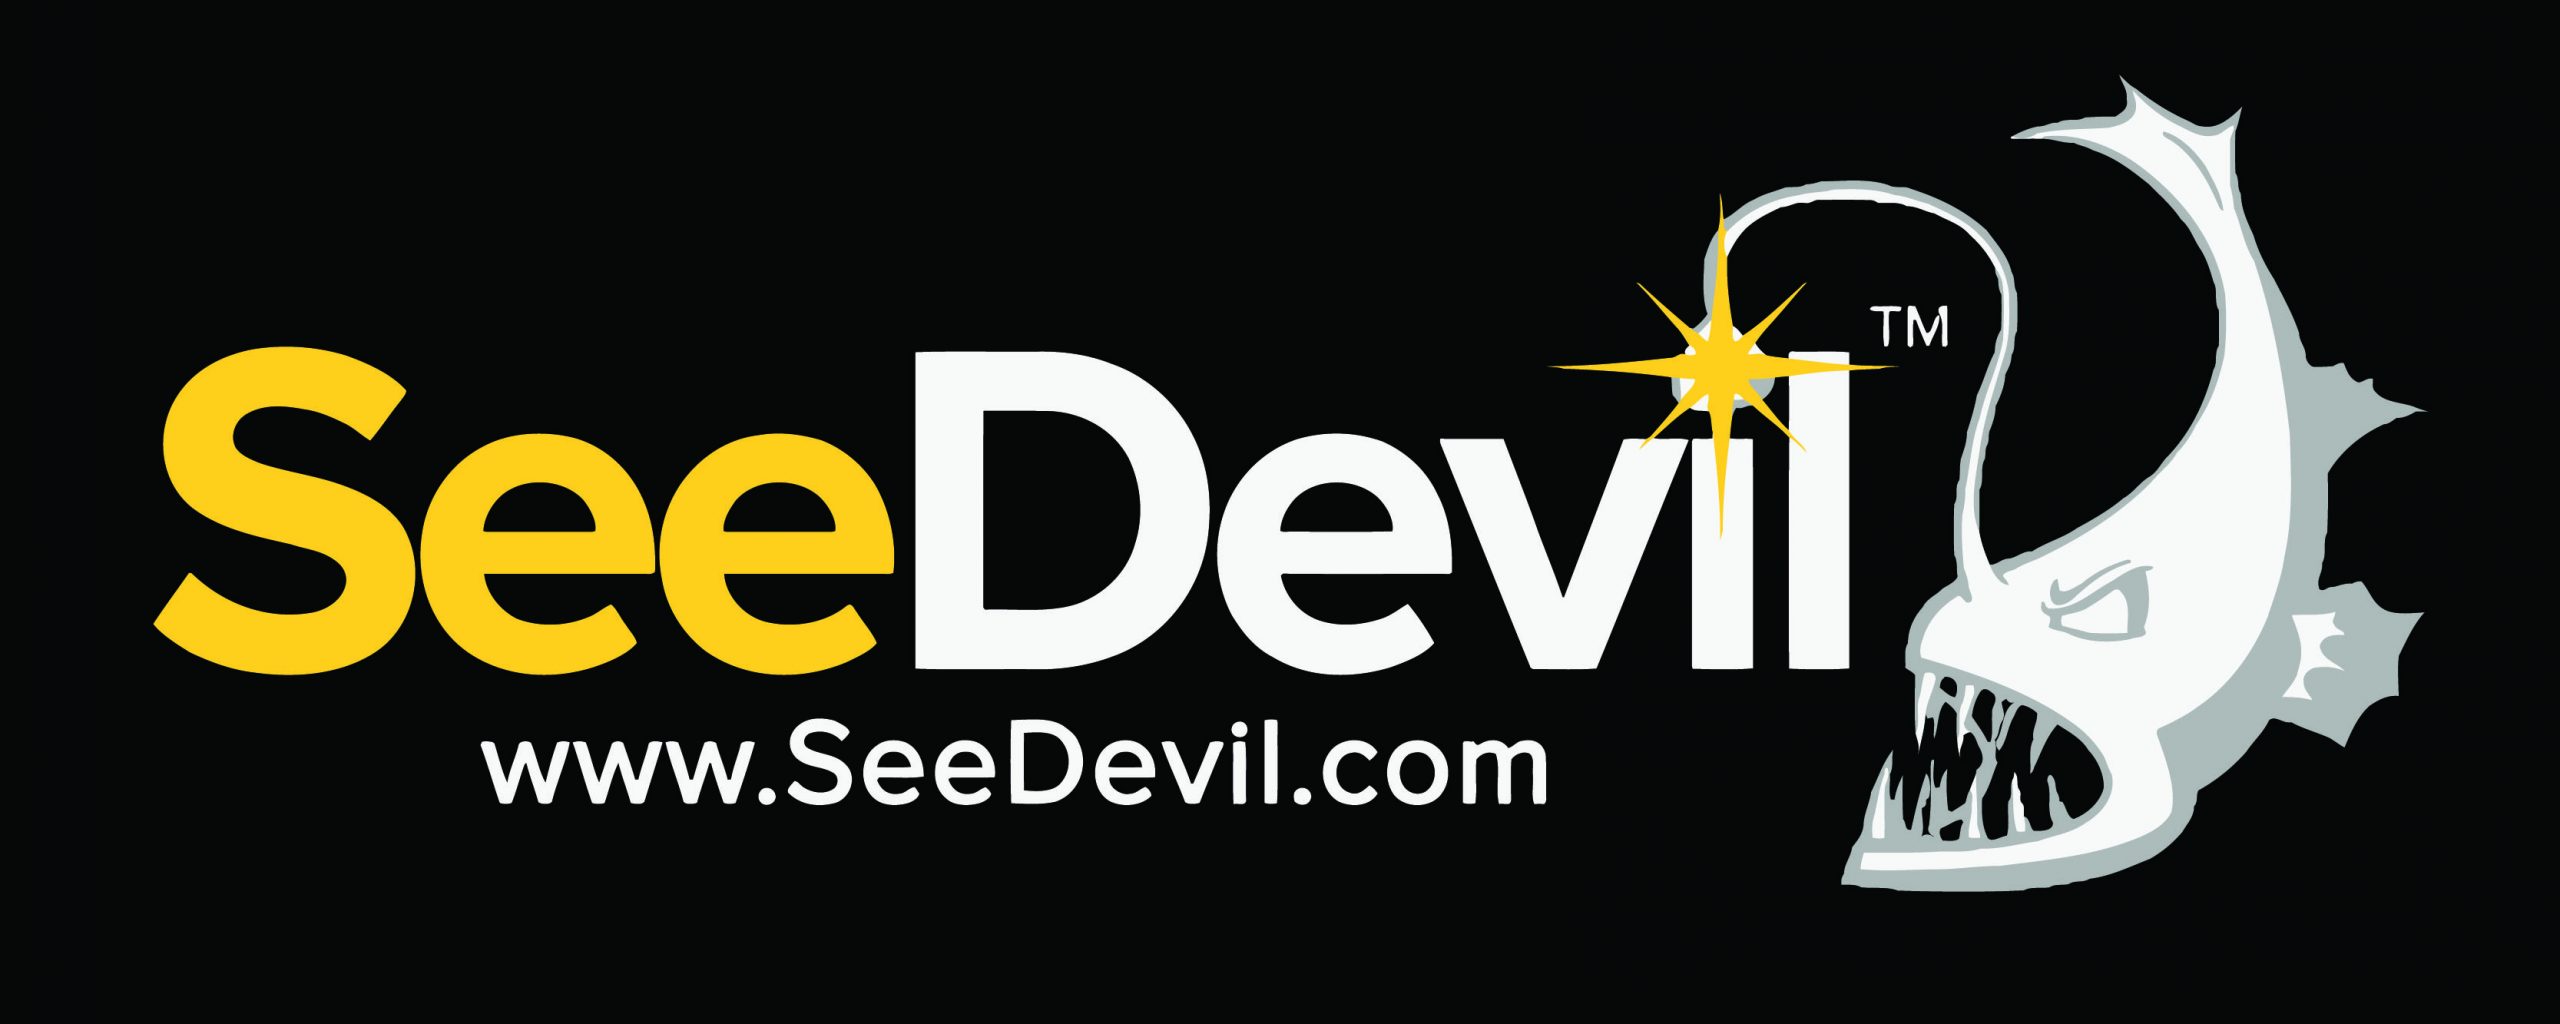 See Devil